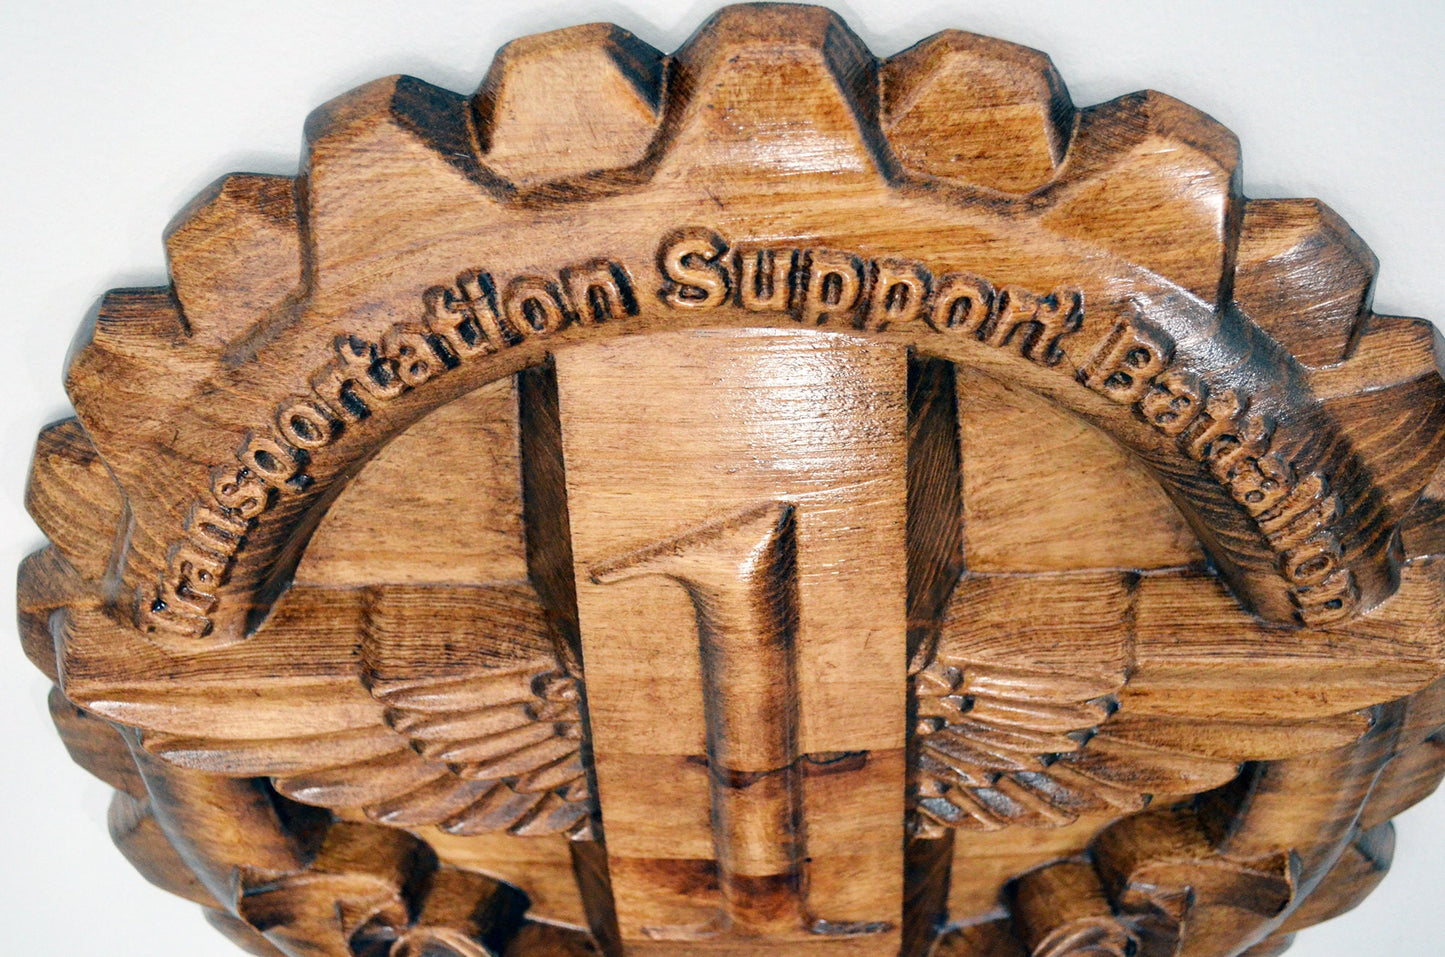 USMC 1st Transportation Support Battalion, 3d wood carving, military plaque